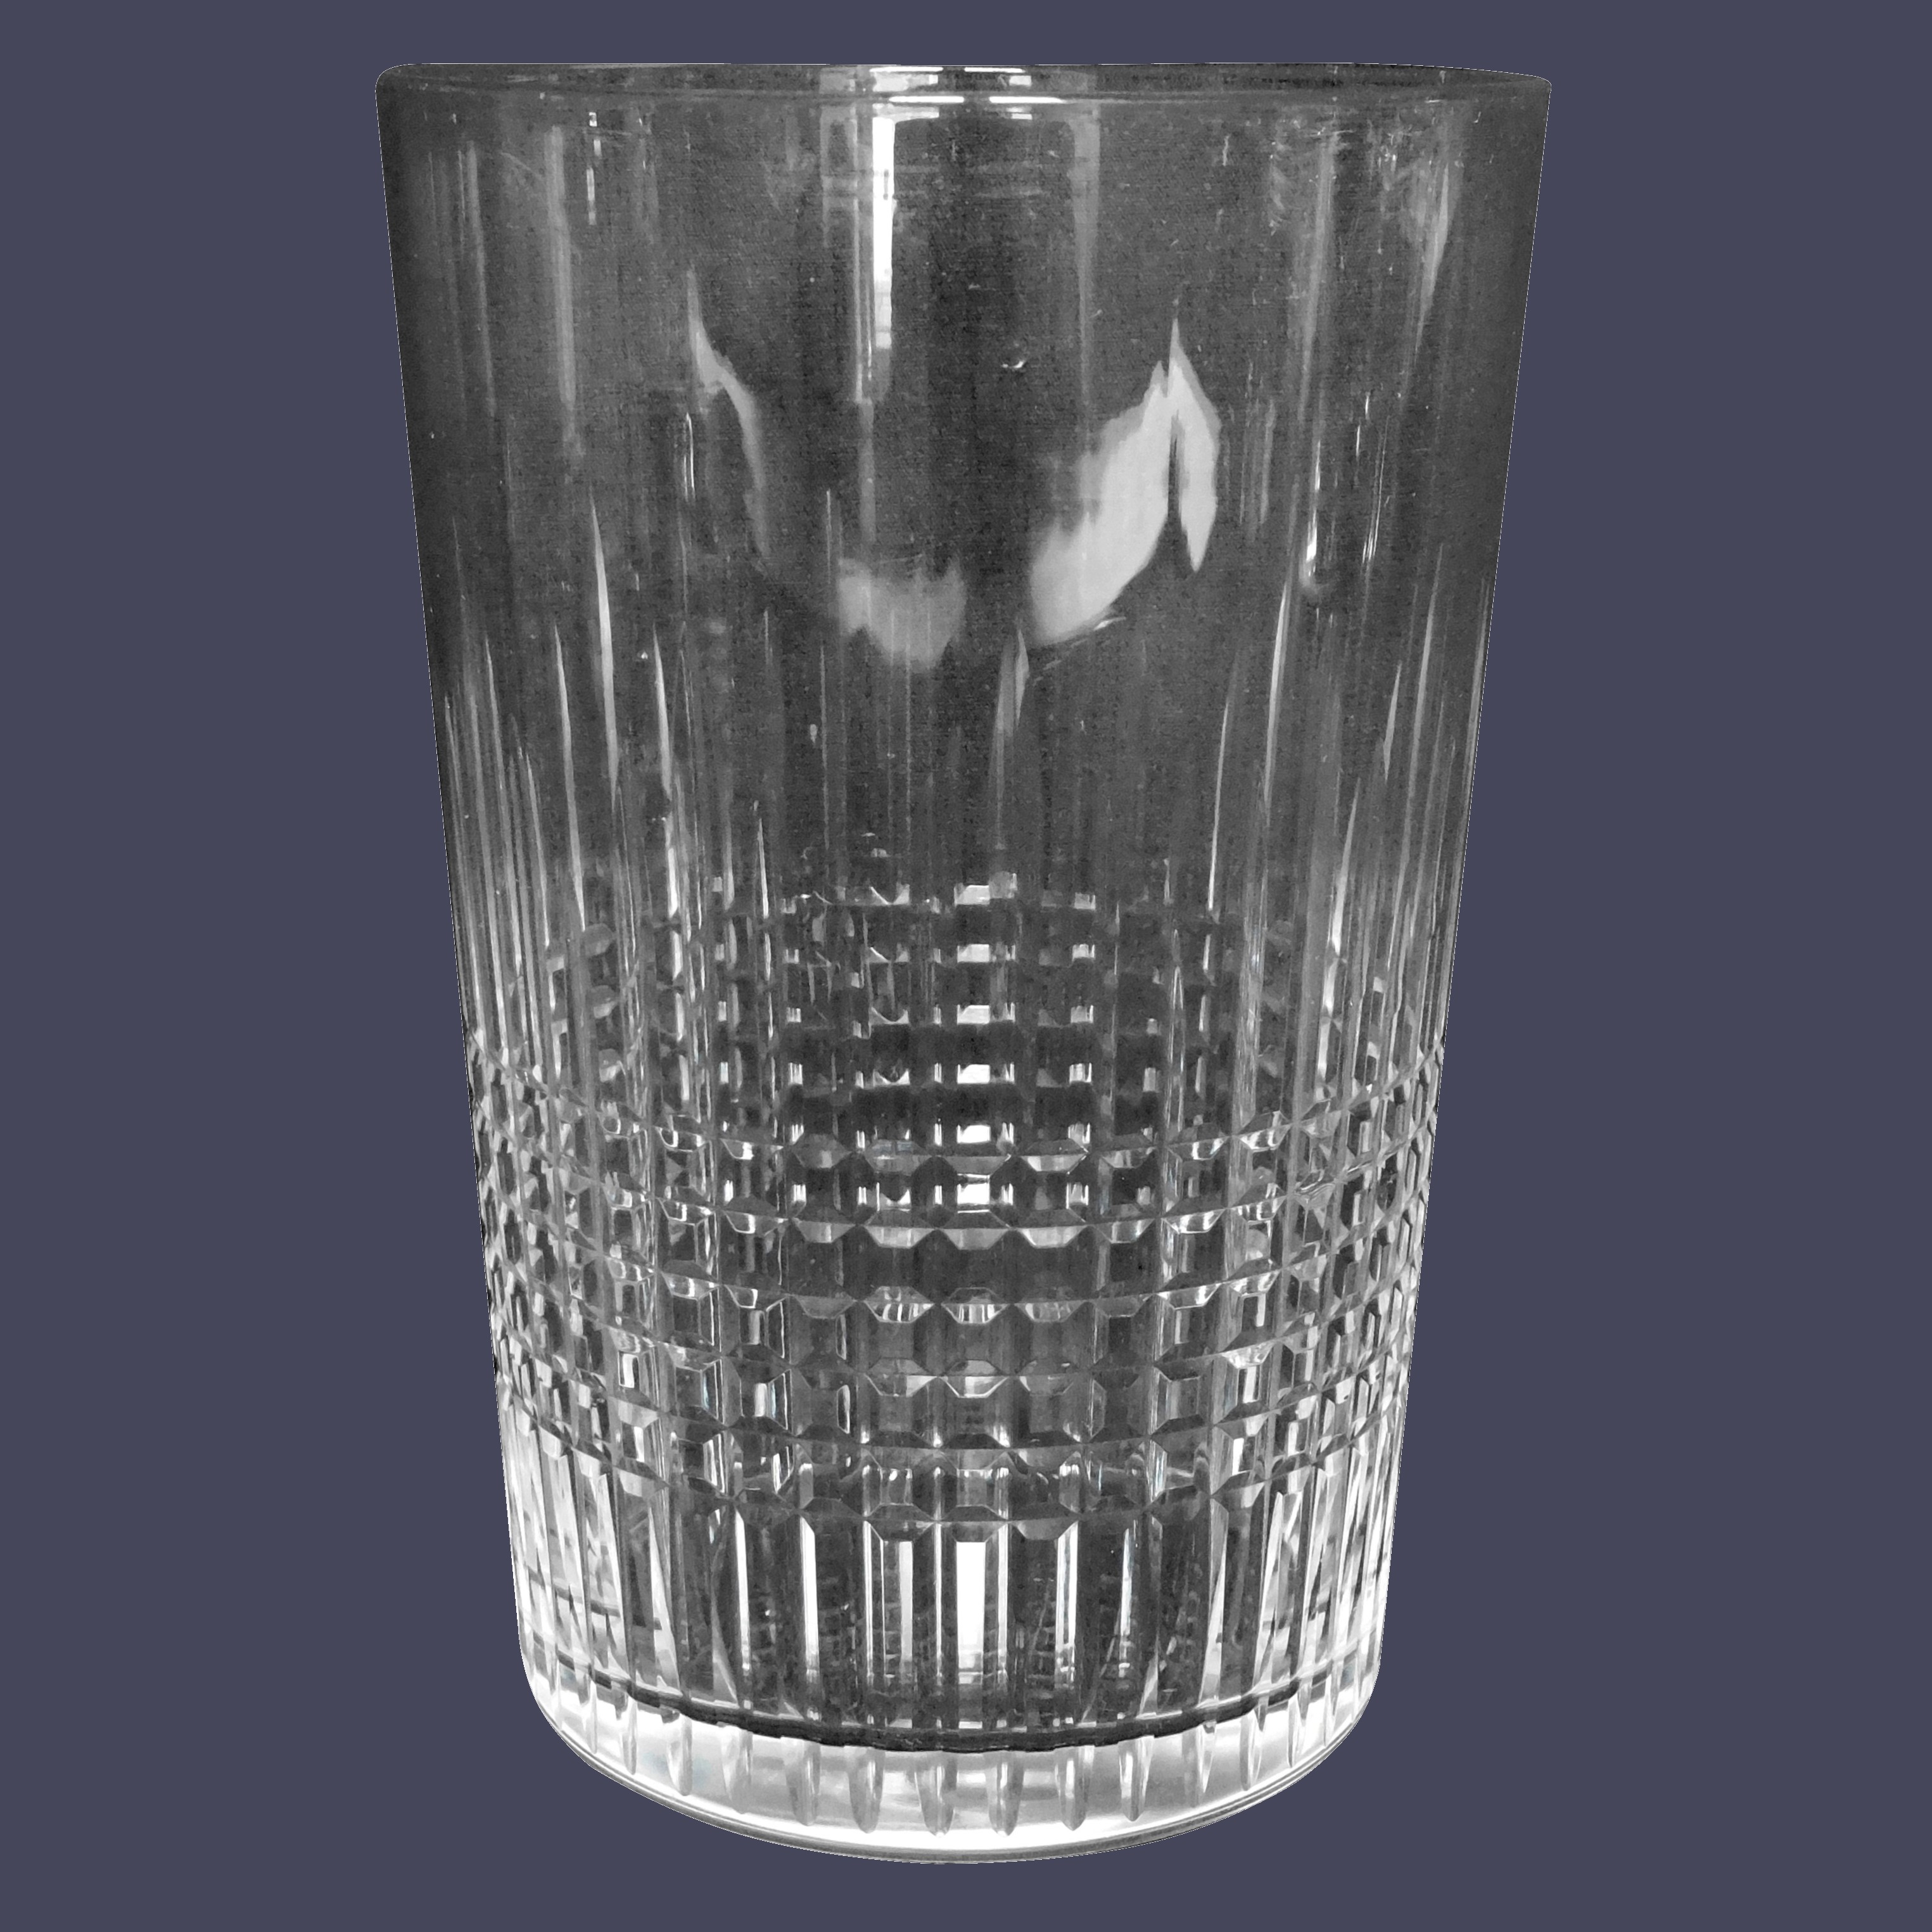 Tall Baccarat crystal beer glass or gobelet, Nancy pattern - 12cm